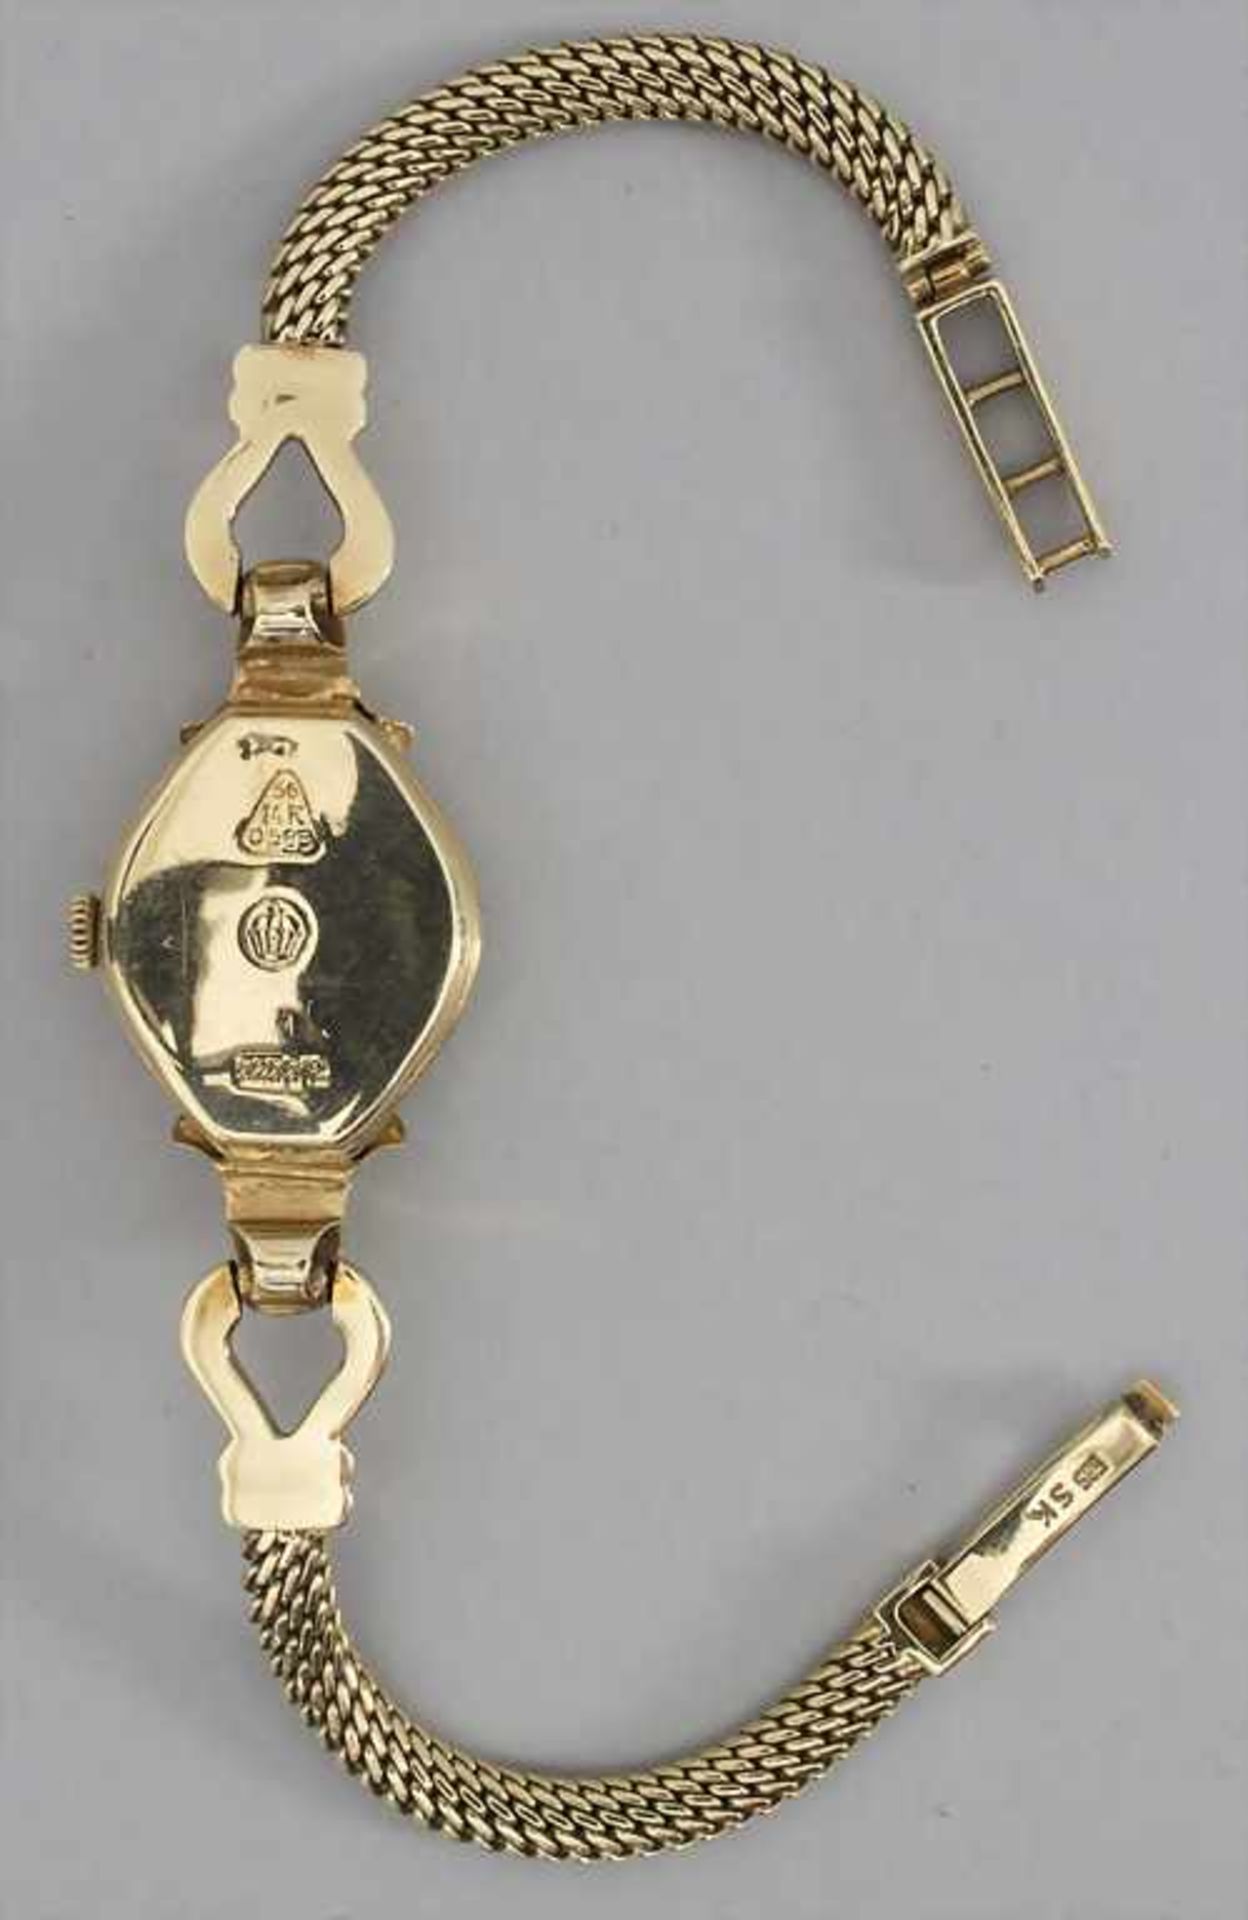 Damenarmbanduhr in Gold / A ladies watch in gold, H.F.B, um 1960 - Bild 5 aus 5